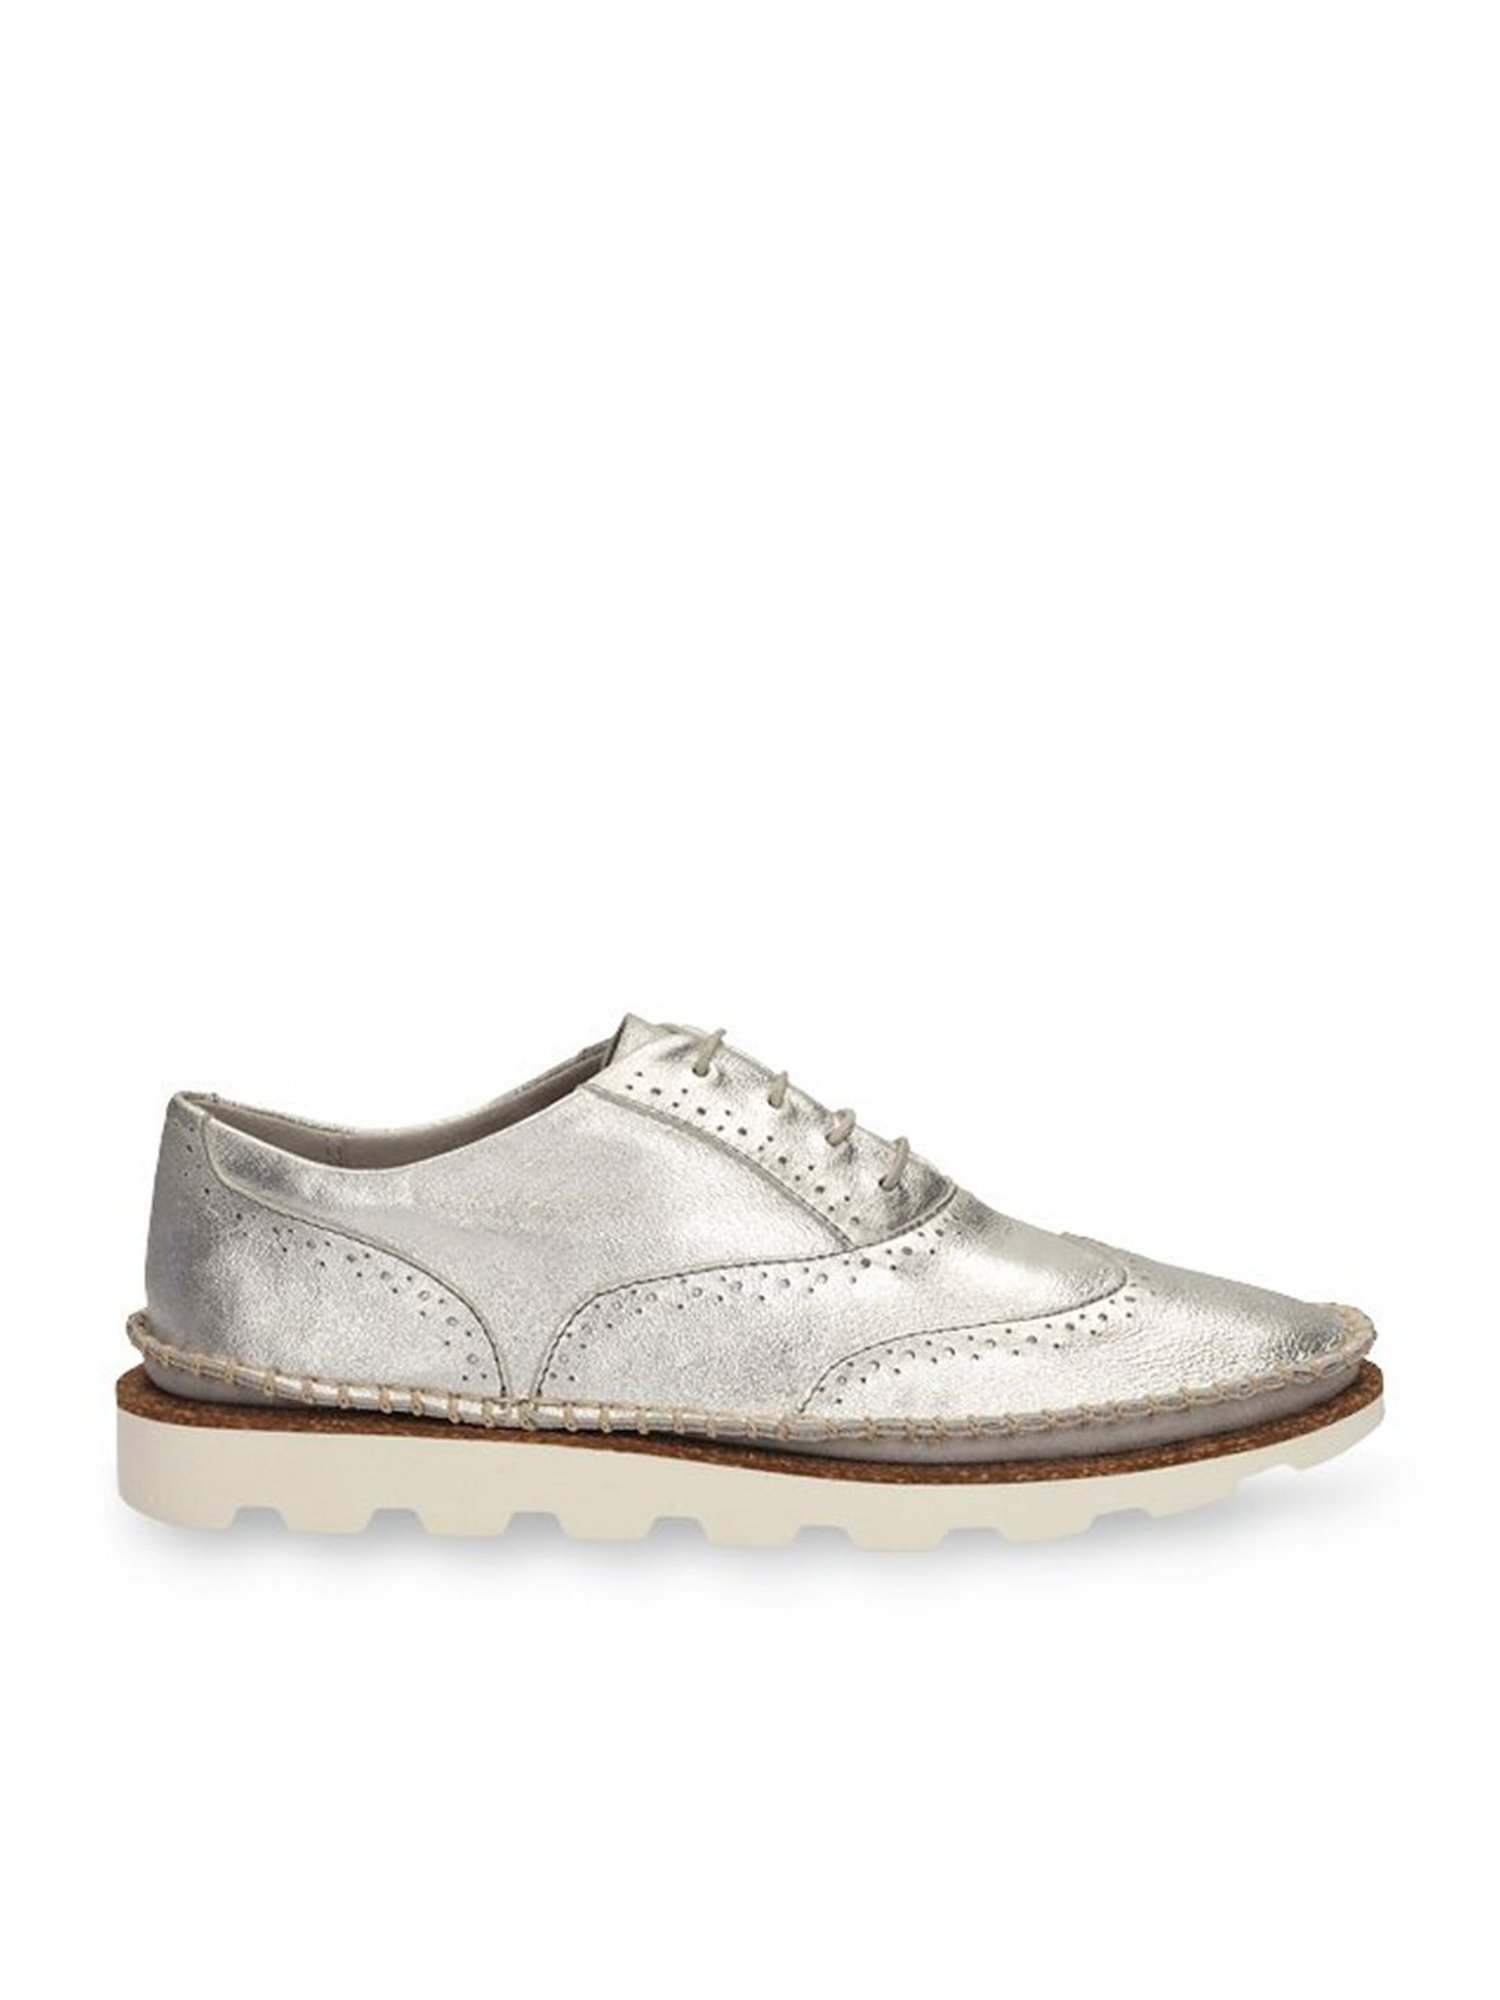 ontgrendelen Toerist enthousiast Buy Clarks Damara Rose Silver Oxford Shoes for Women at Best Price @ Tata  CLiQ